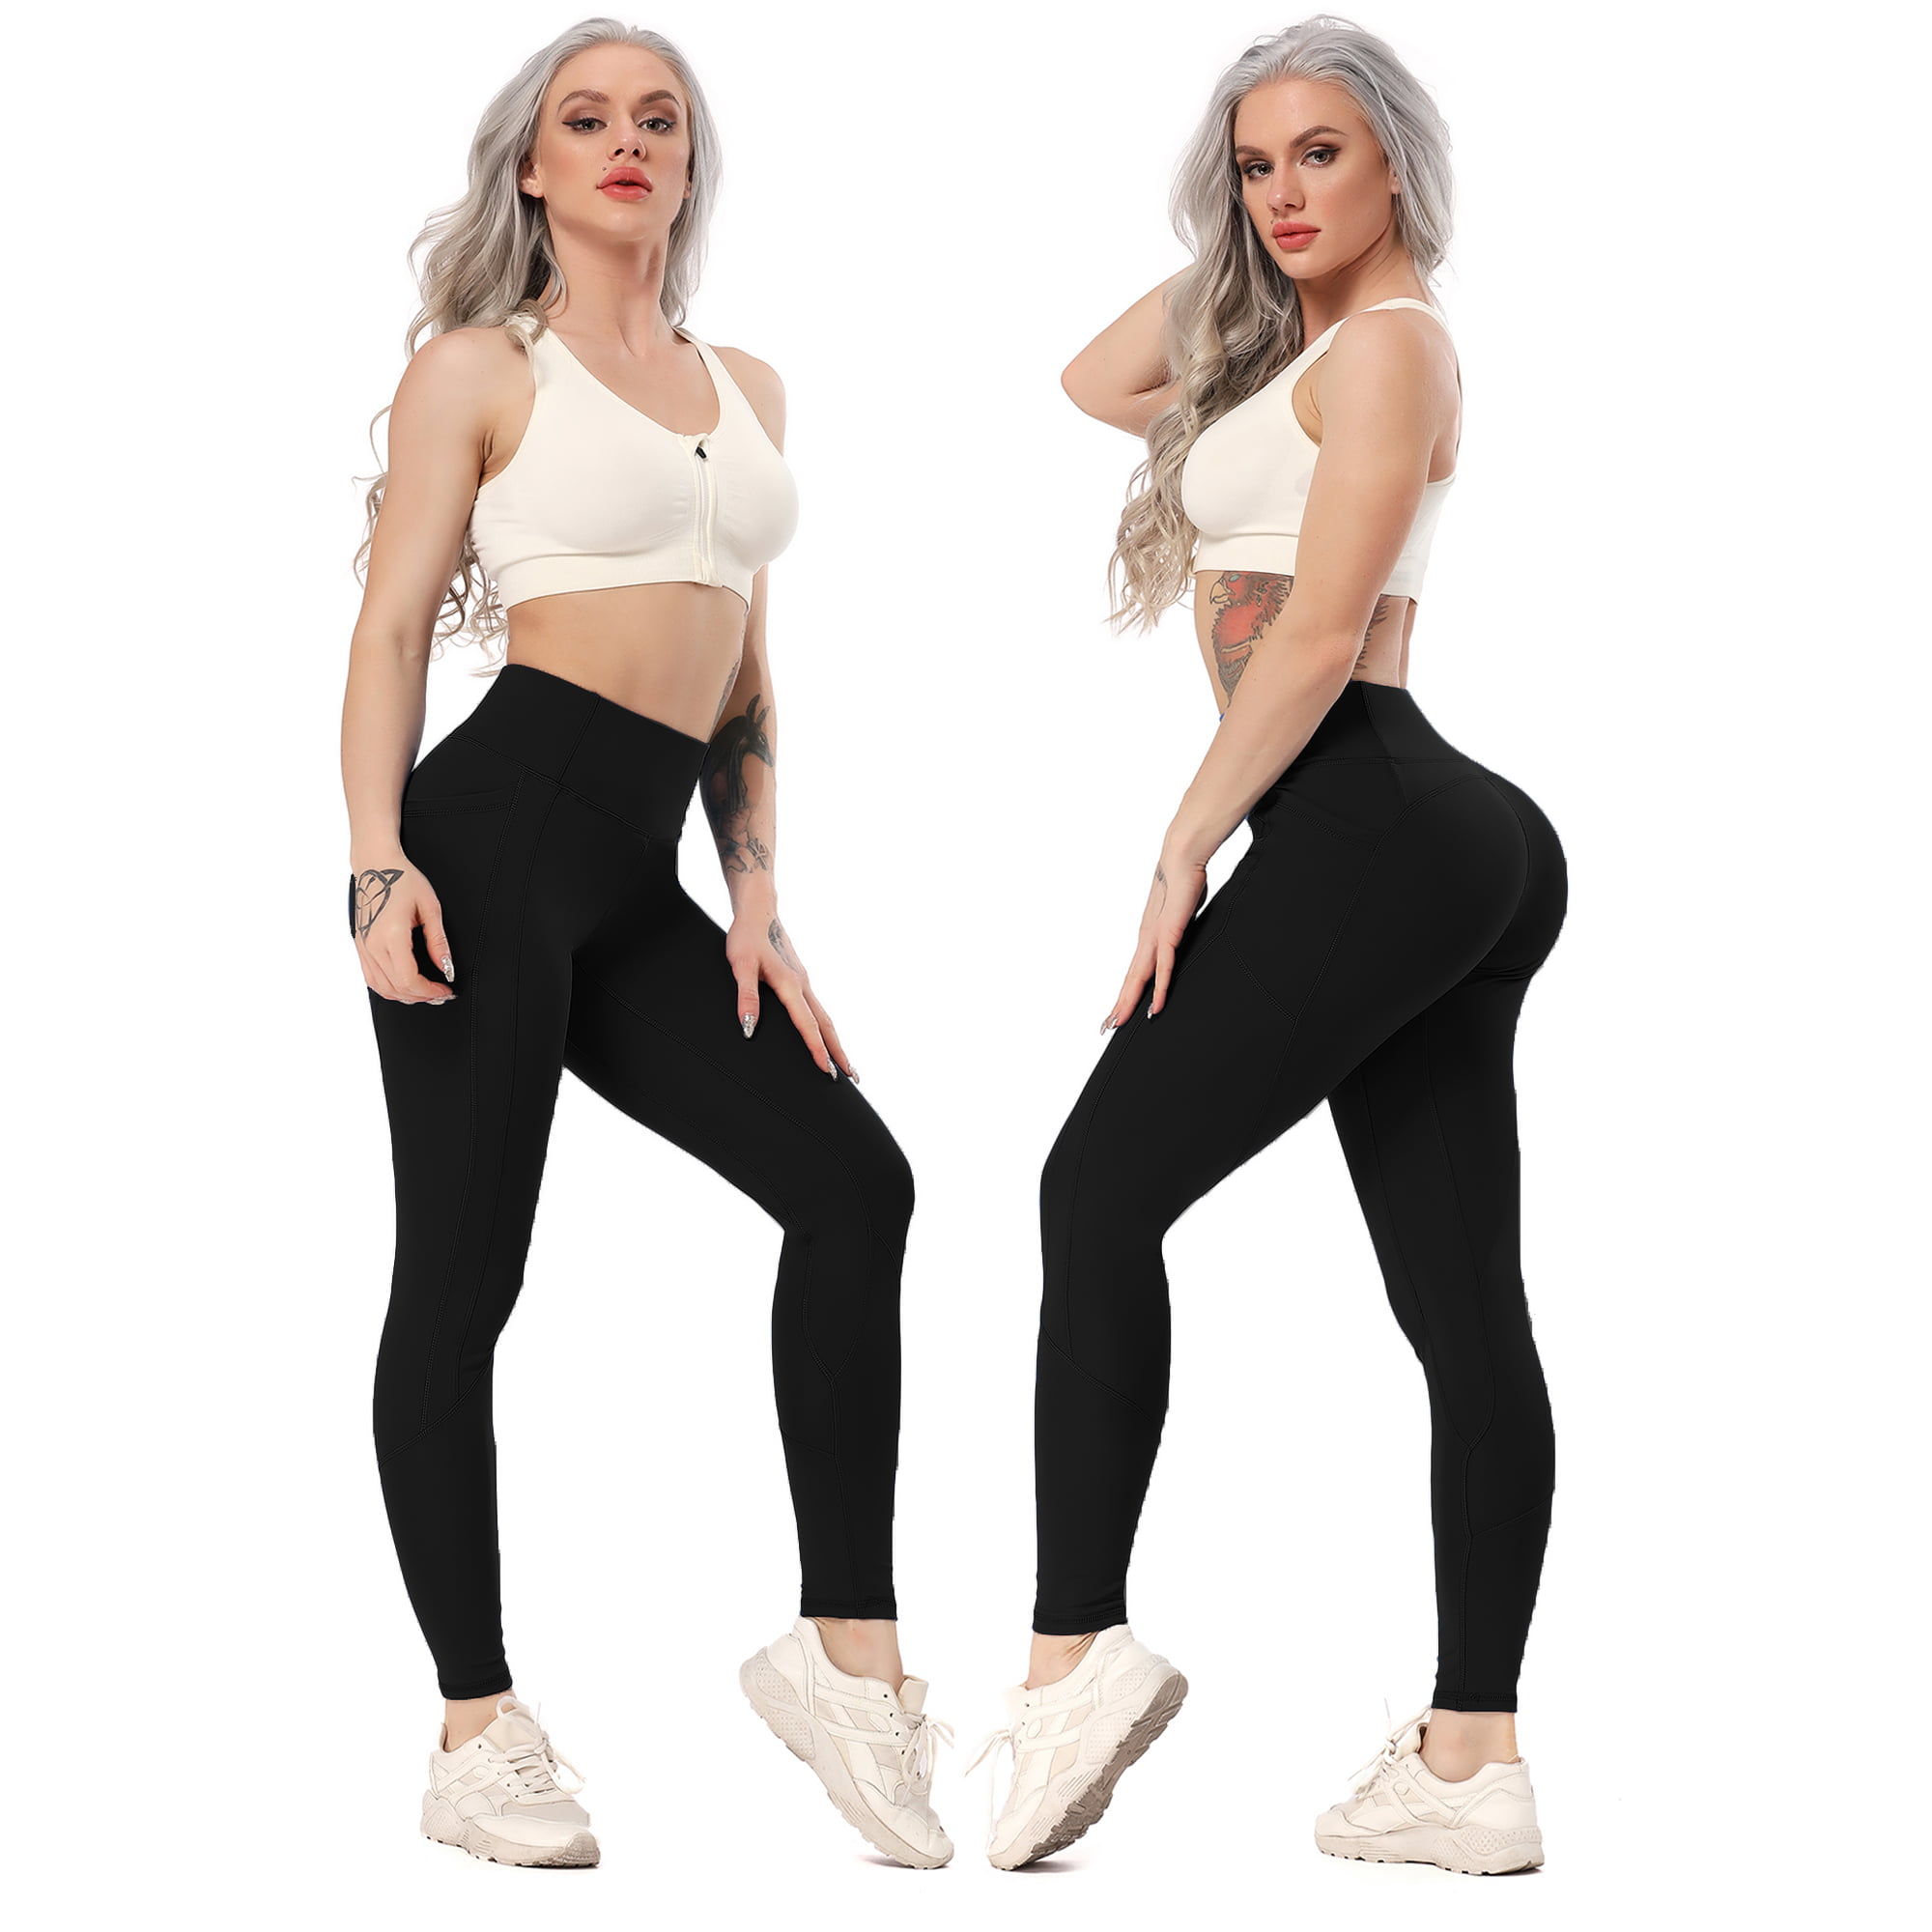 Kiyotoo Yoga Pants for Women High Waist Tummy Control Non See-Through Workout Pants with Side Phone Pocket Yoga Capris 